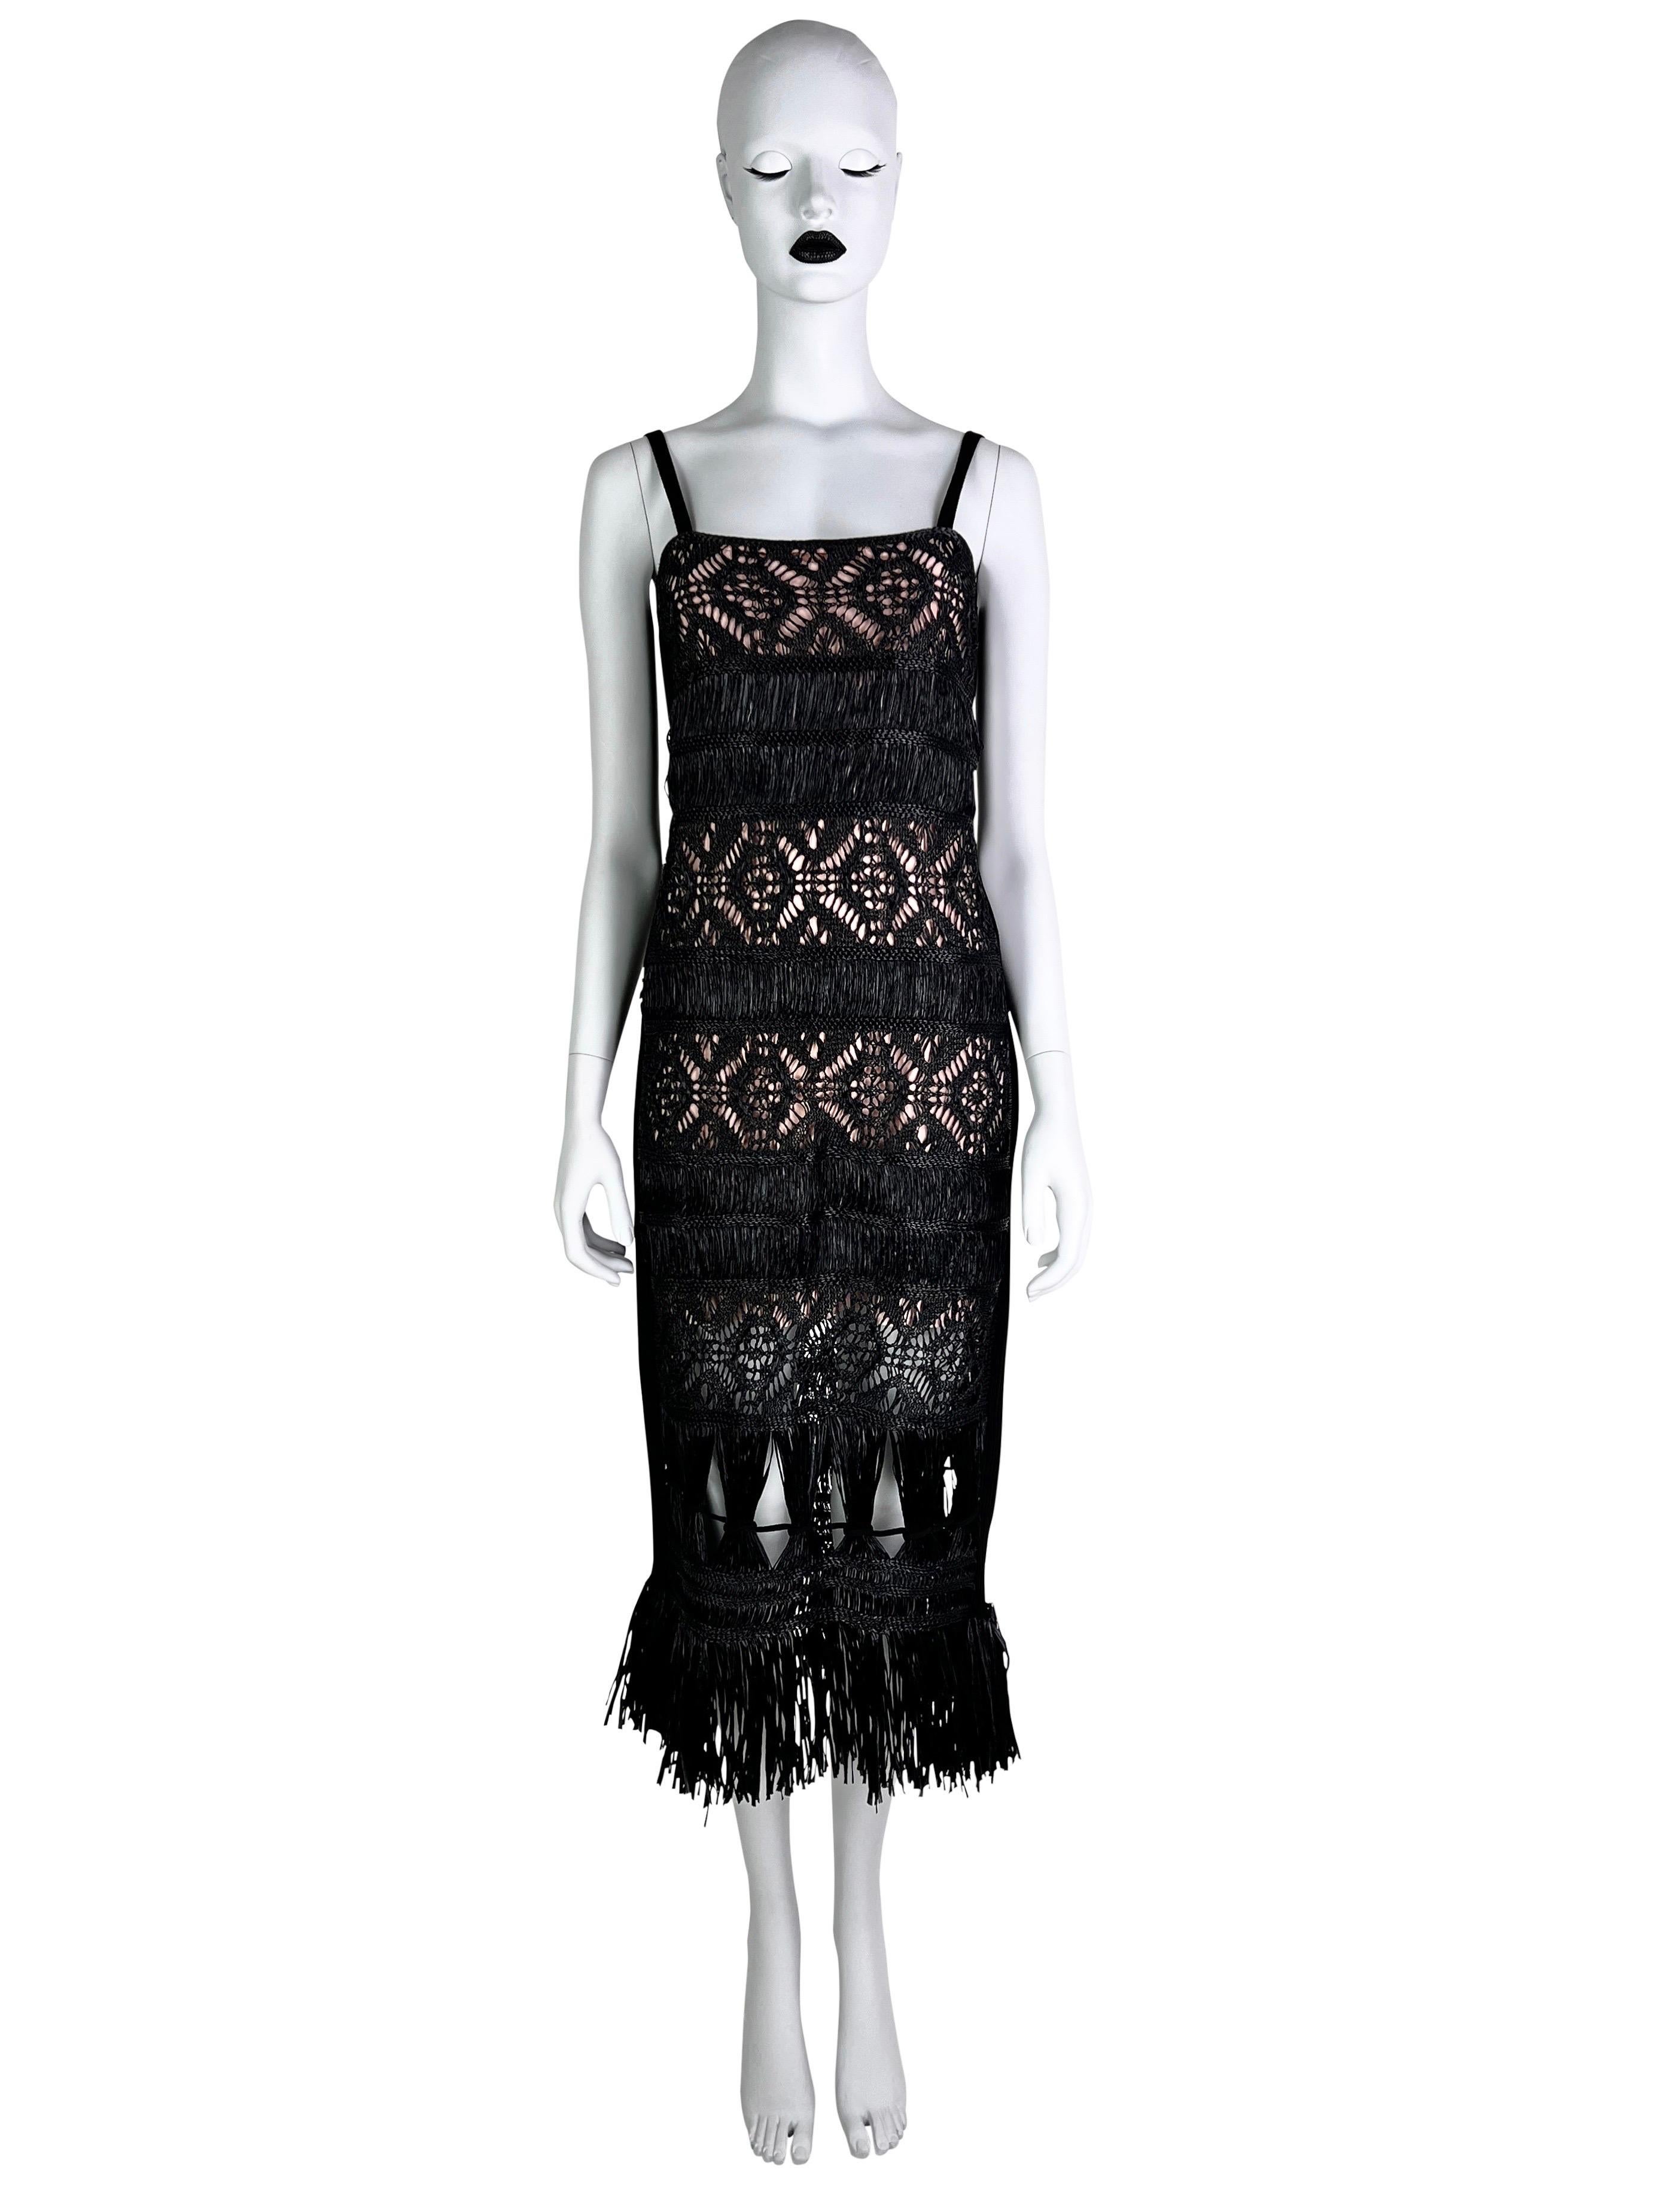 Jean-Paul Gaultier Spring 2013 Braided Raffia Dress For Sale 1